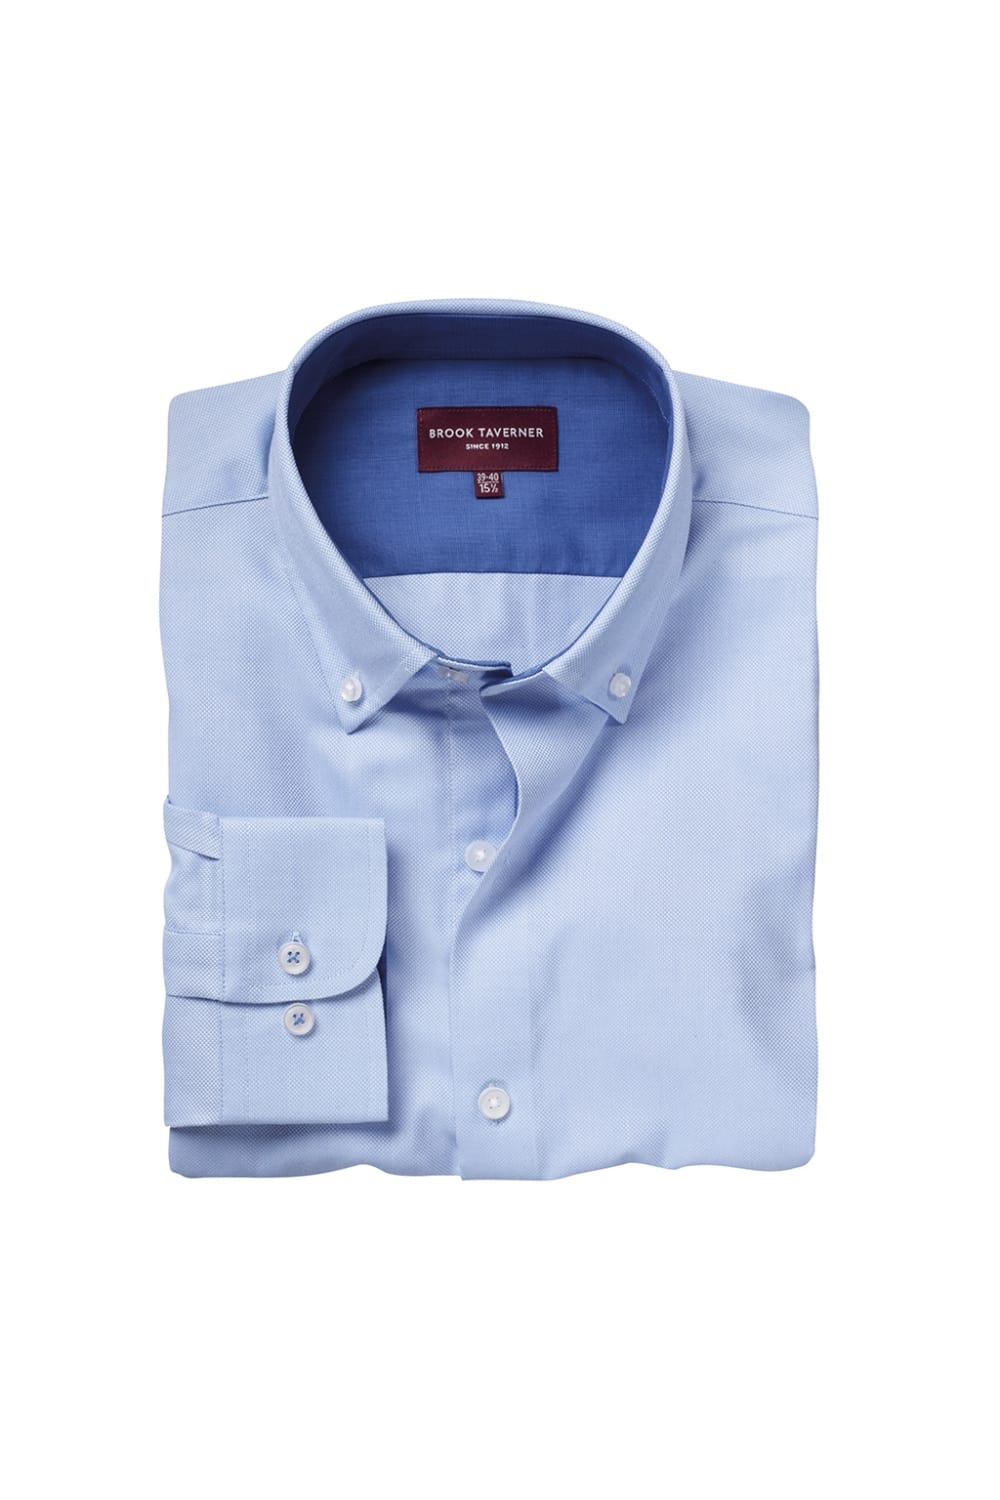 Brook Taverner Mens Toronto Long Sleeve Oxford Shirt (Sky Blue)